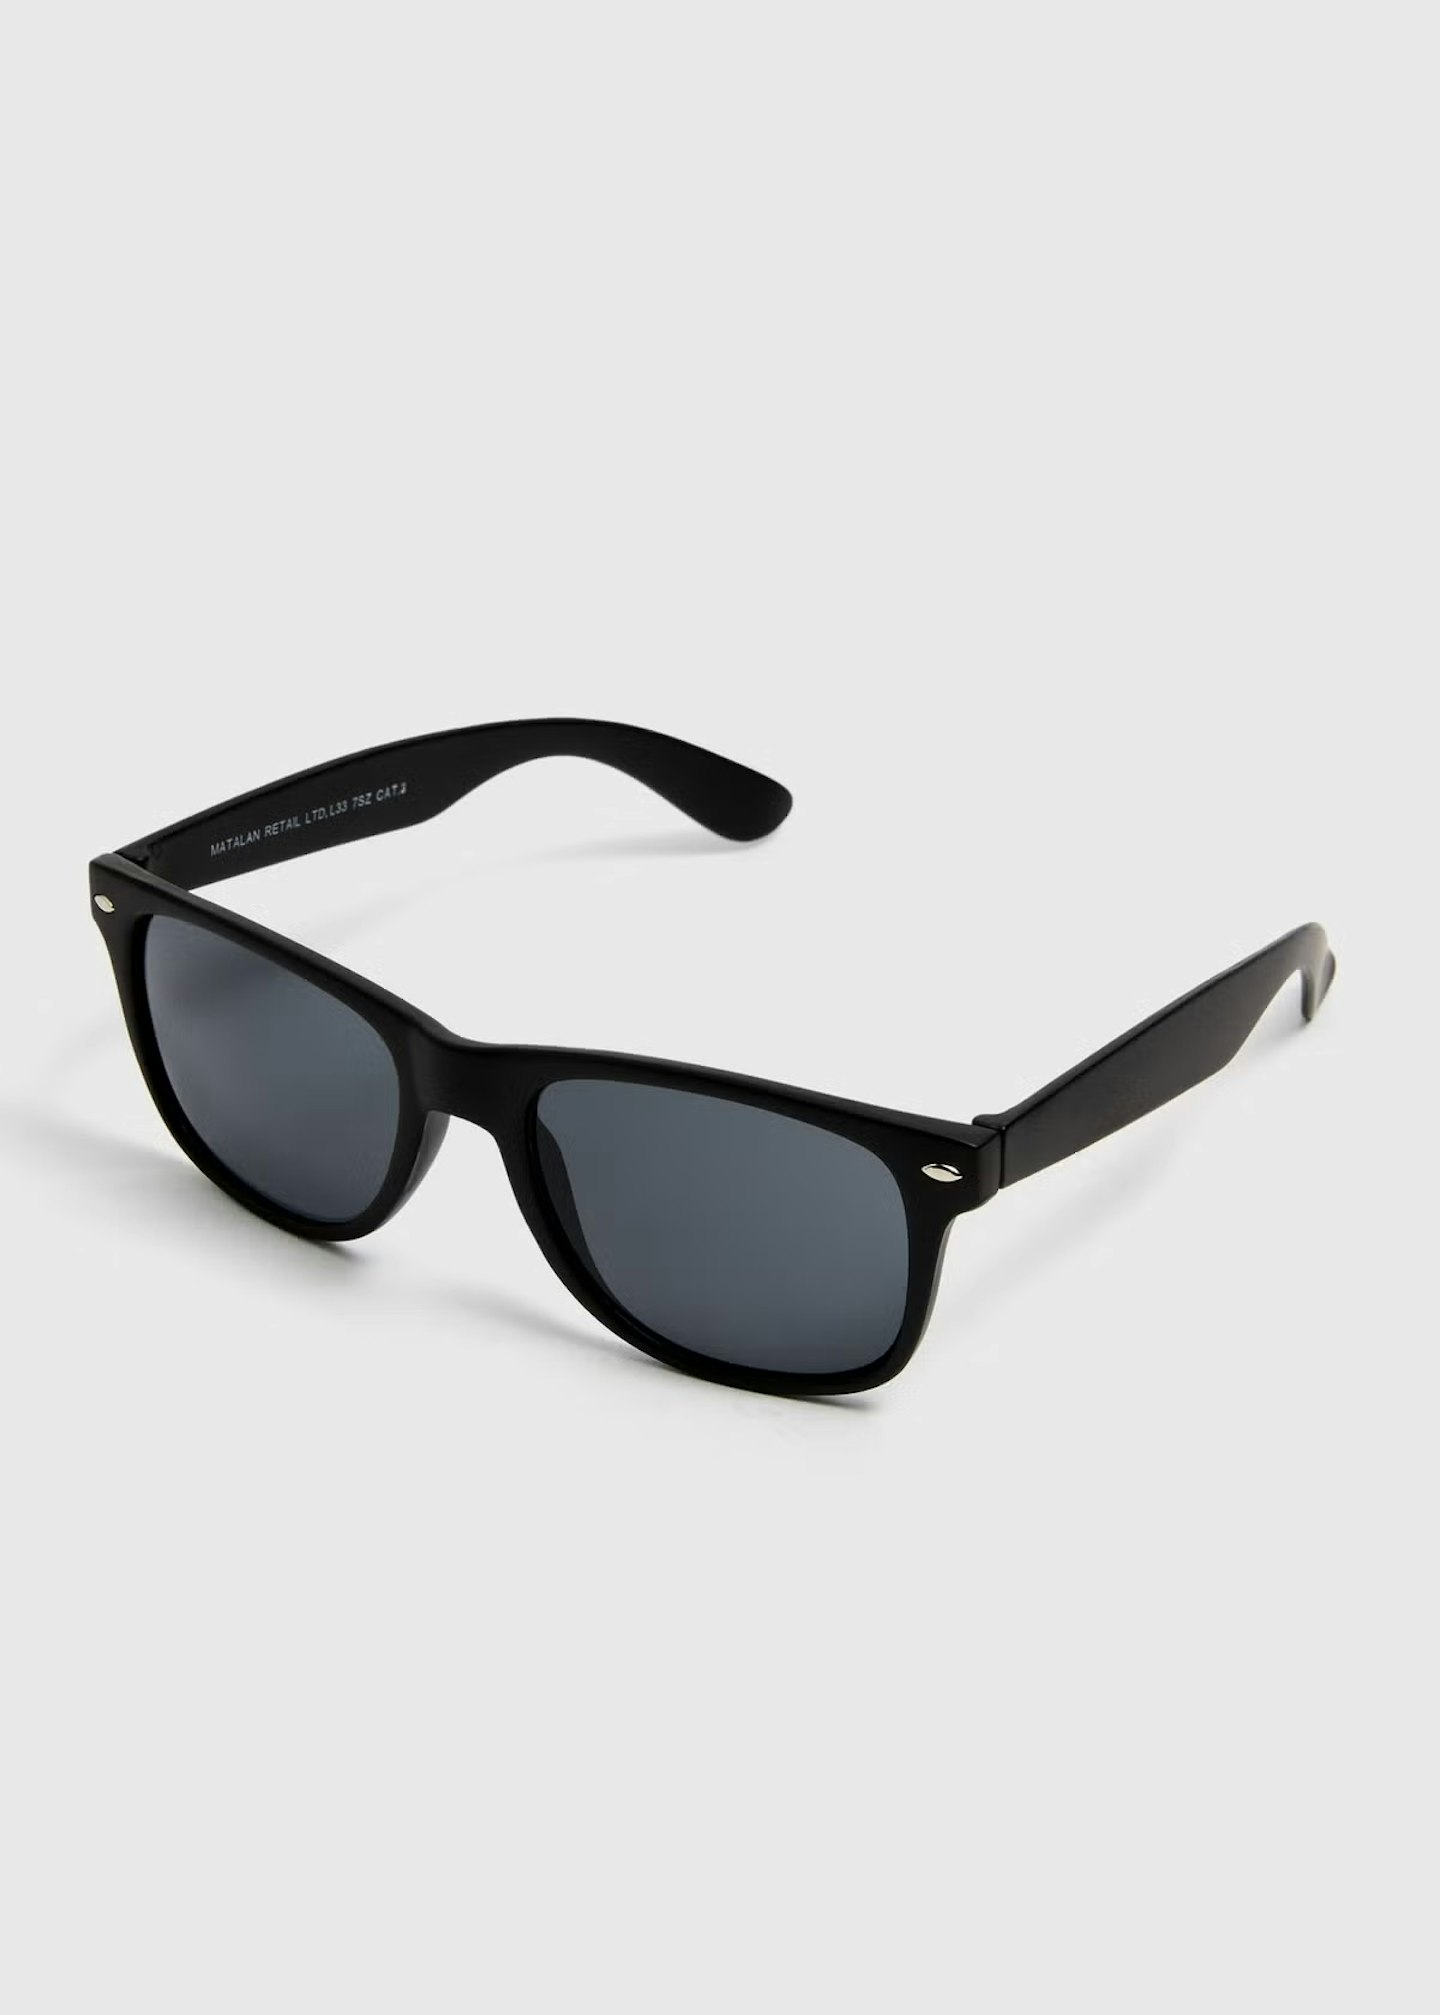 Matalan matte black sunglasses